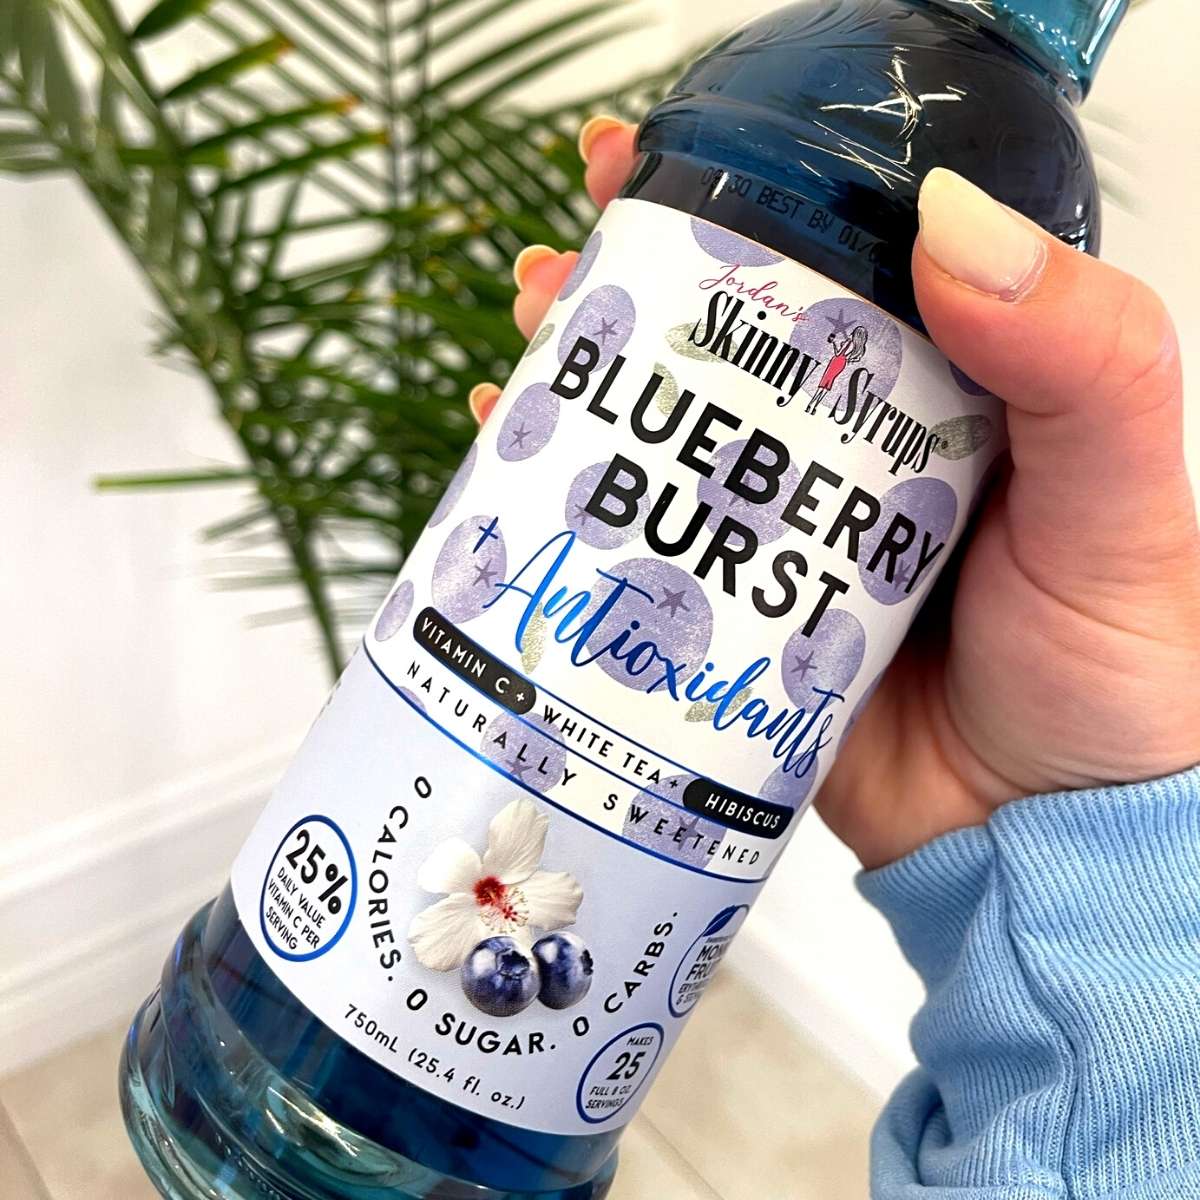 Blueberry Burst + Antioxidants Syrup - Skinny Mixes